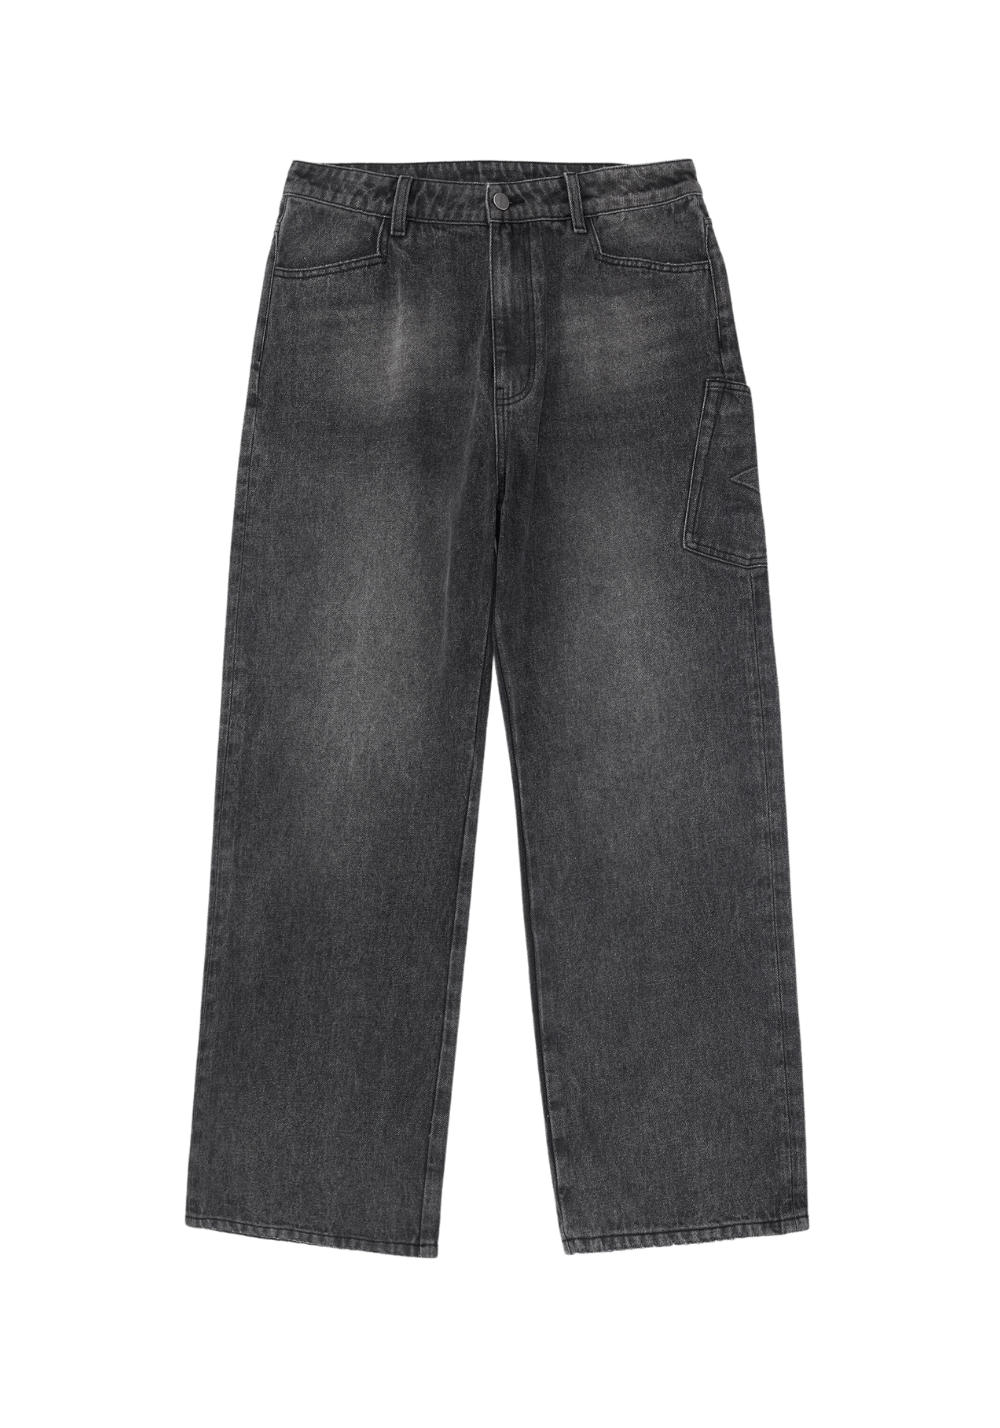 Embossed Denim Jeans - PSYLOS 1, Embossed Denim Jeans, Pants, PCLP, PSYLOS 1